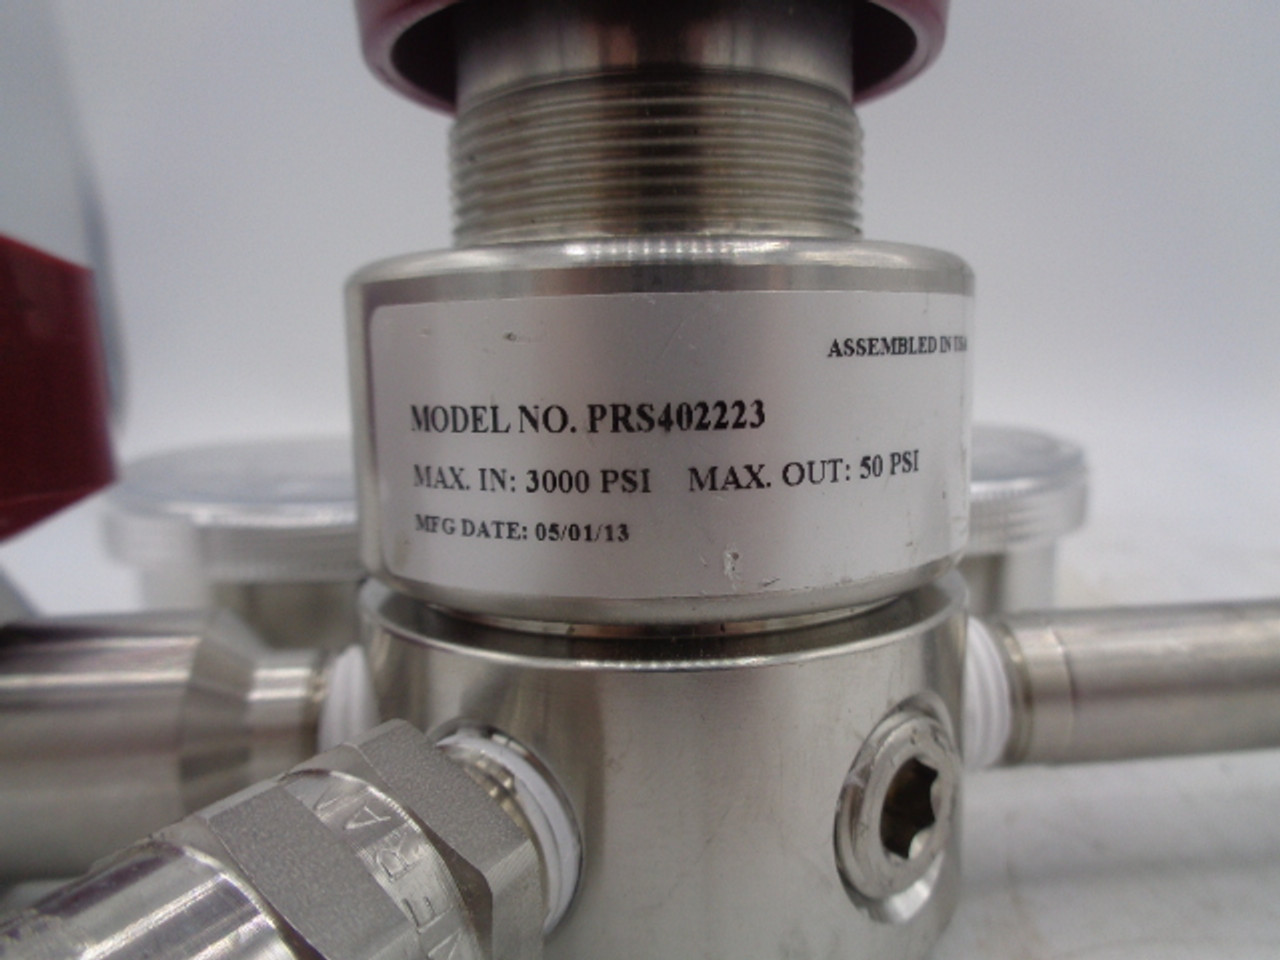 ProStar PRS402223 Double Gauge Gas Regulator